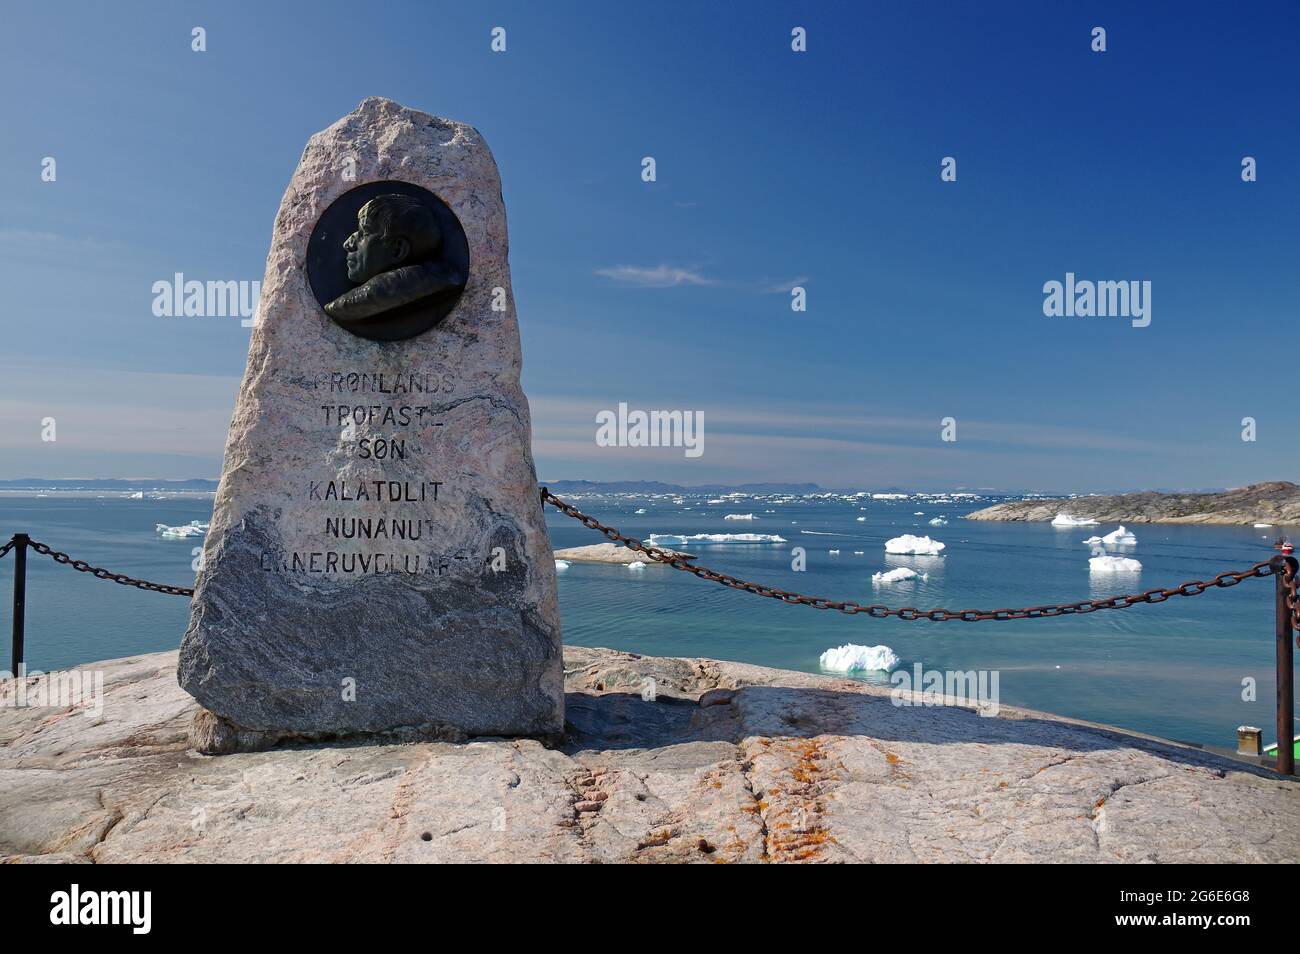 Monument to Knud Rasmussen, stone, bay with icebergs, Ilulissat, Disko Bay, Greenland, Denmark Stock Photo